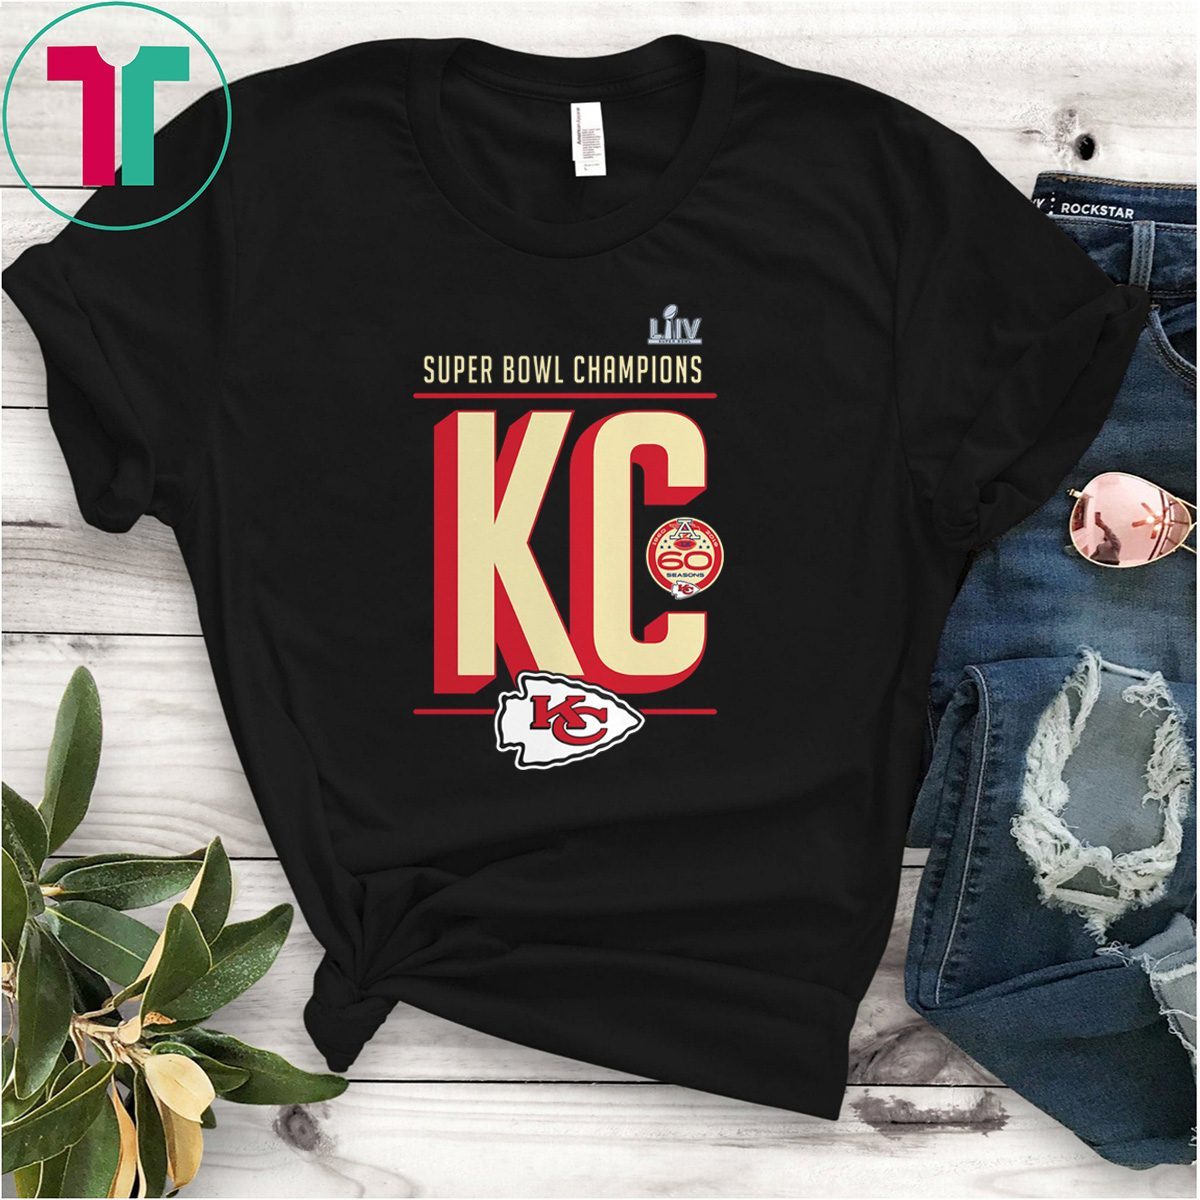 ???? NFL Super Bowl LIV Kansas City Chiefs Champions 2020 Shirt1200 x 1200